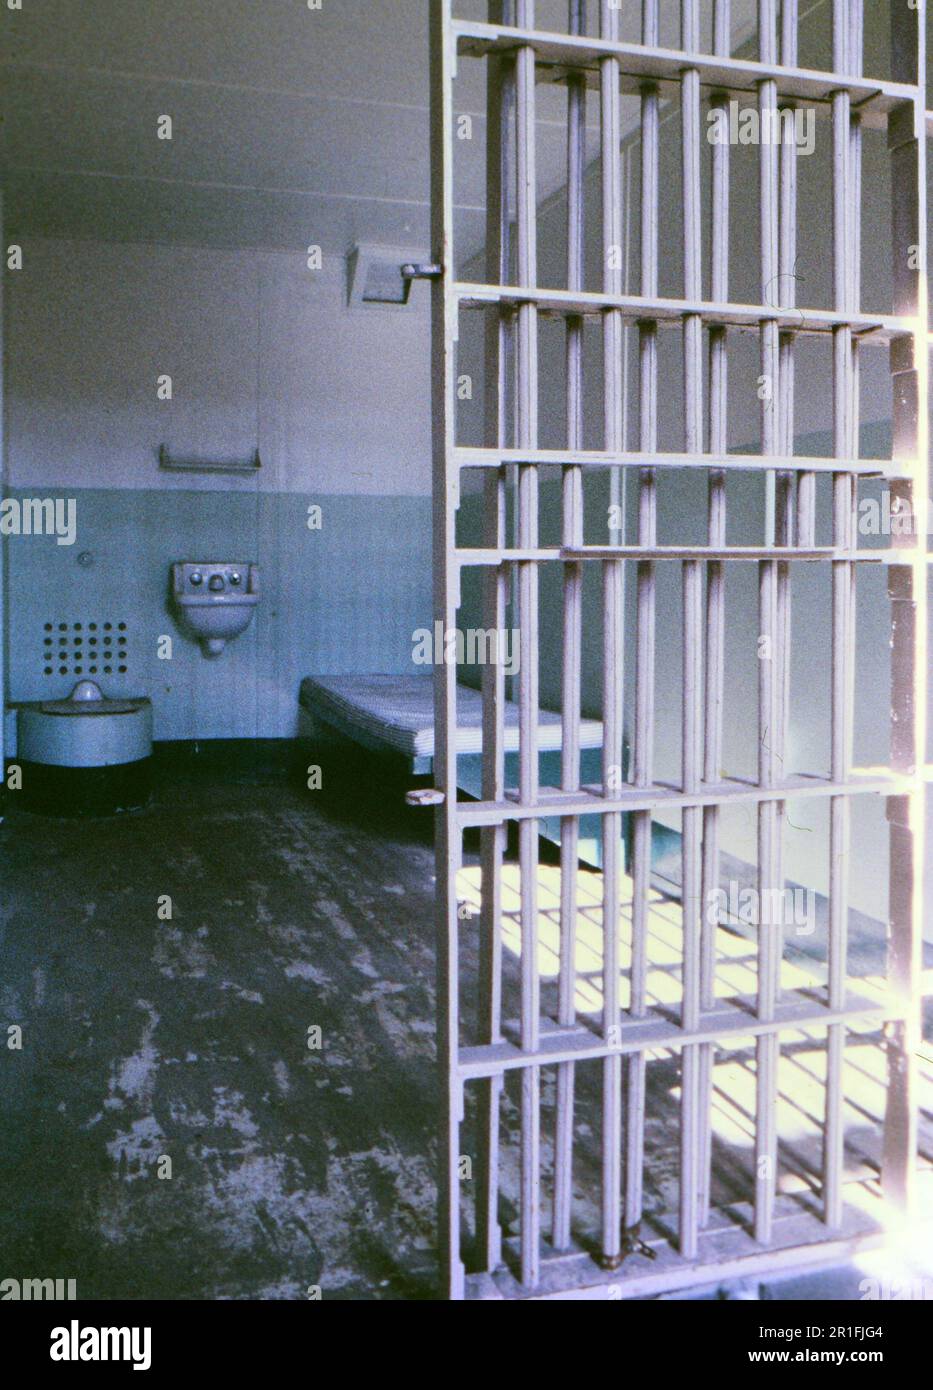 Im Inneren der verlassenen Alcatraz Gefängniszelle ca. 1986 Stockfoto